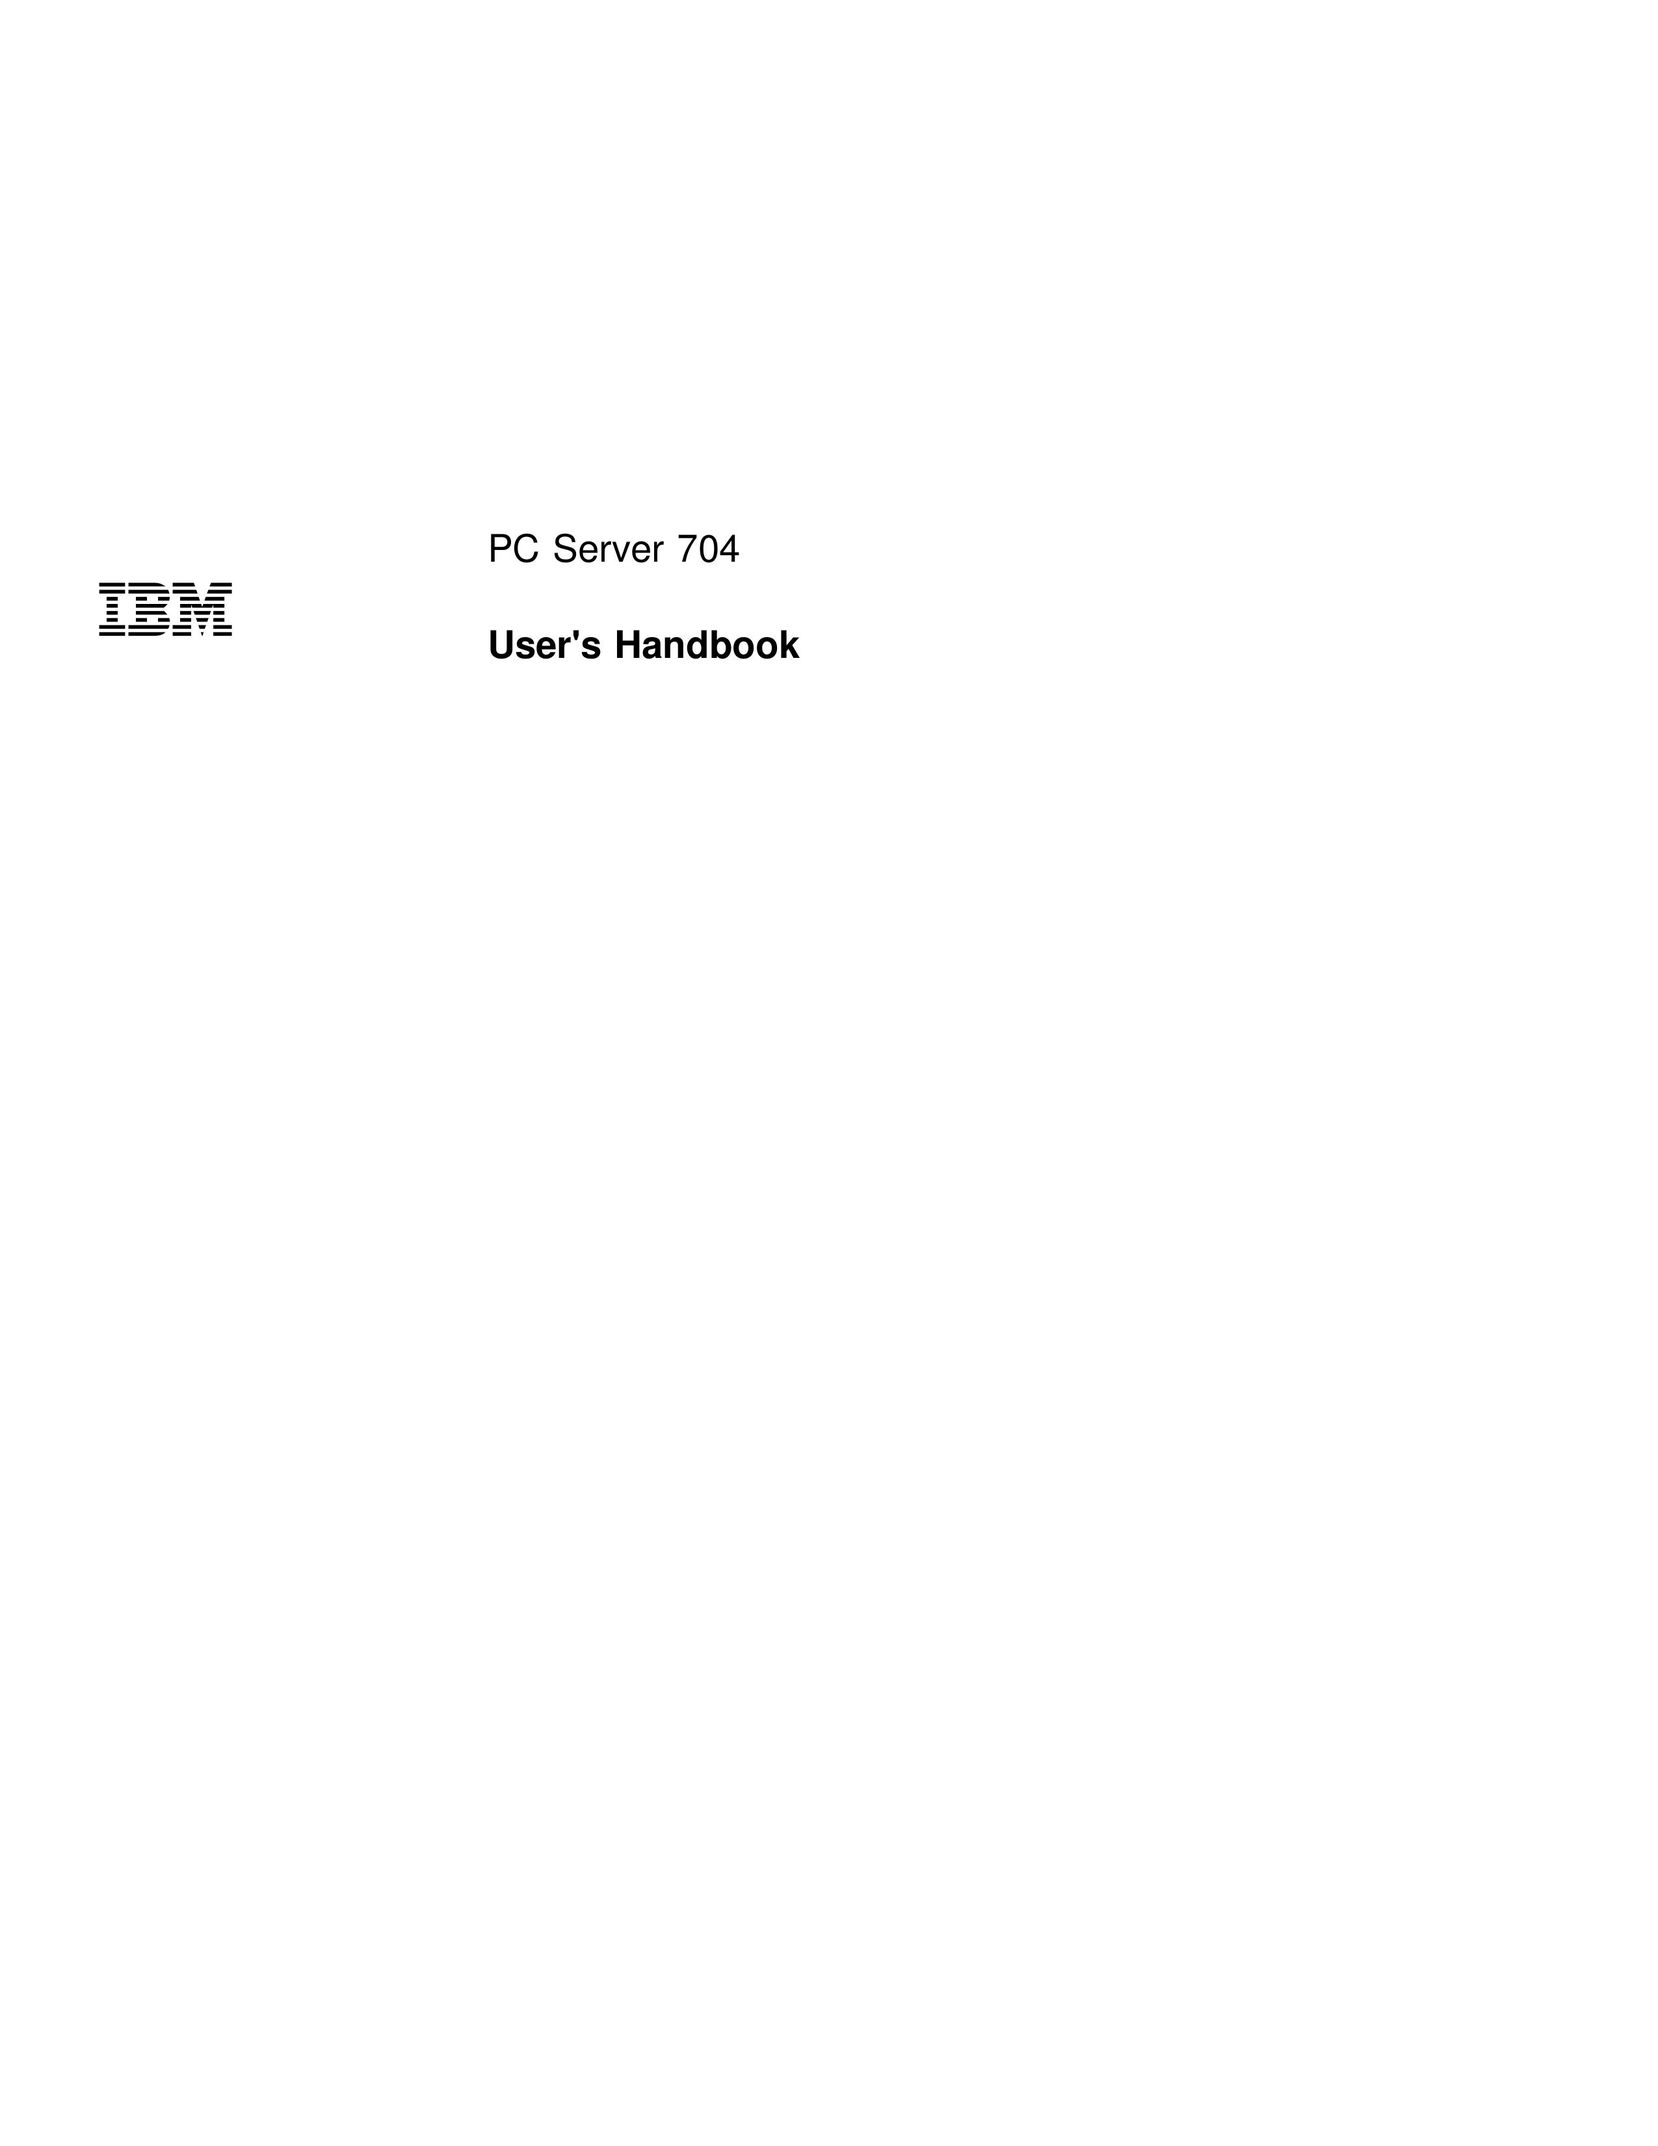 IBM 704 Server User Manual